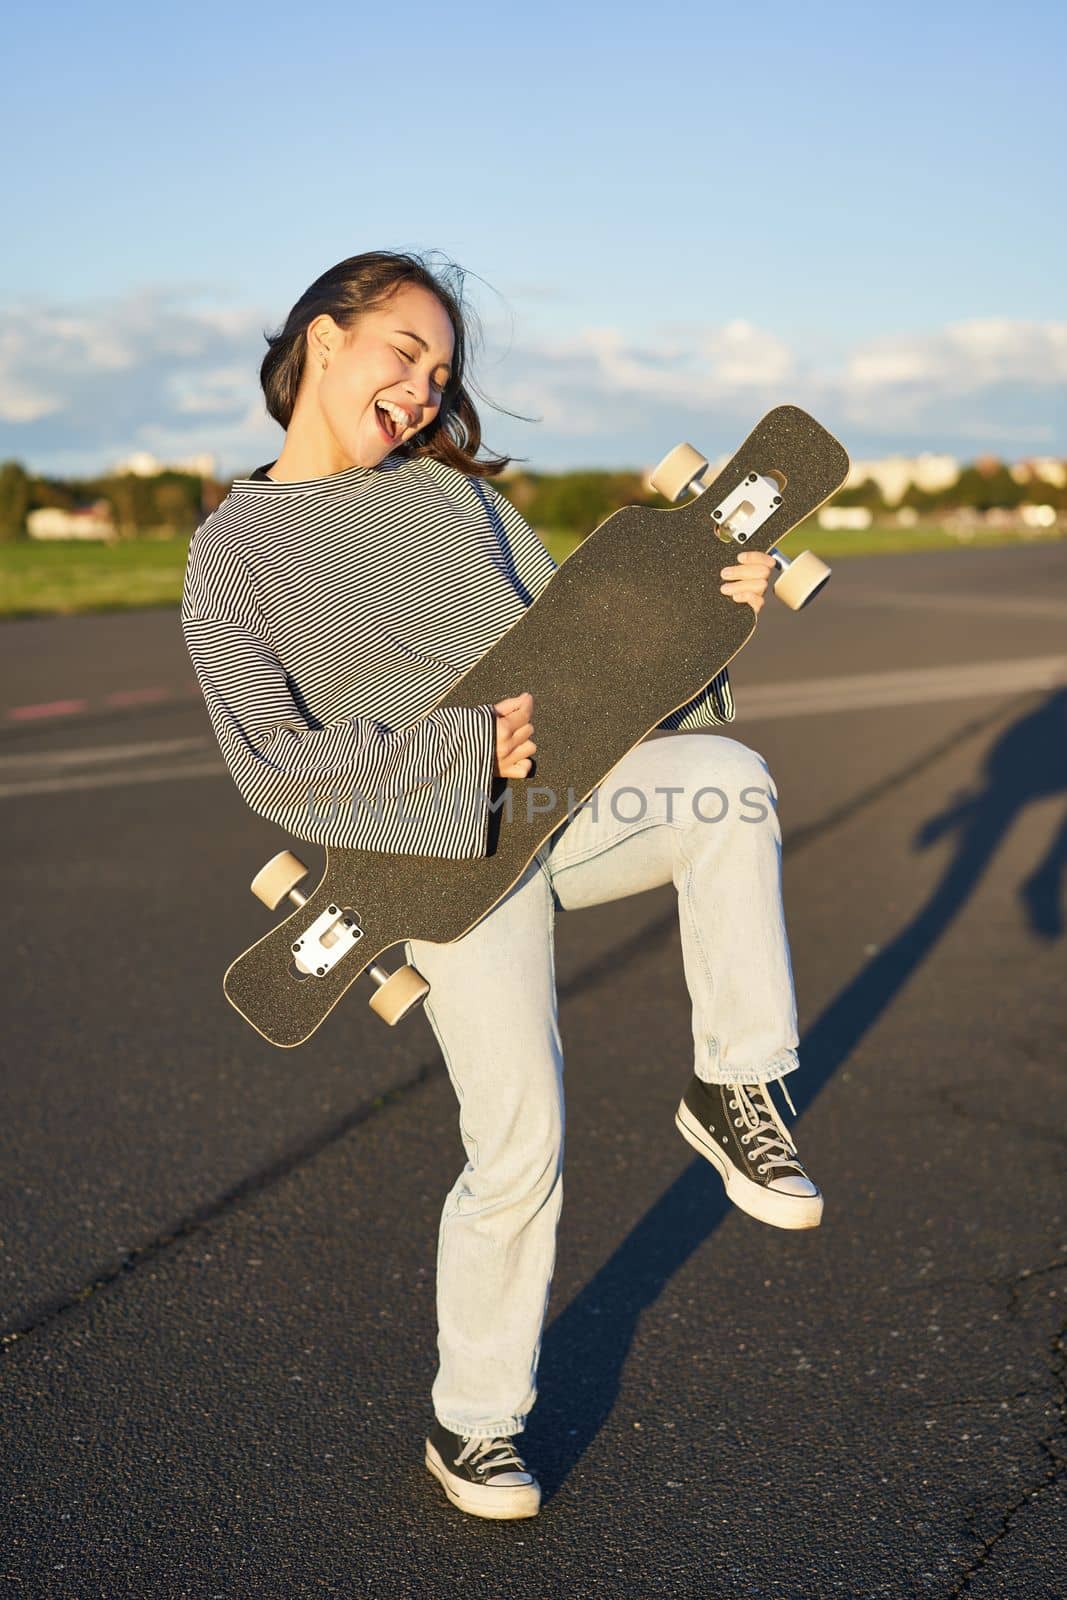 Funny asian girl enjoying skating, holding skateboard like guitar and shadow playing, having fun outdoors by Benzoix